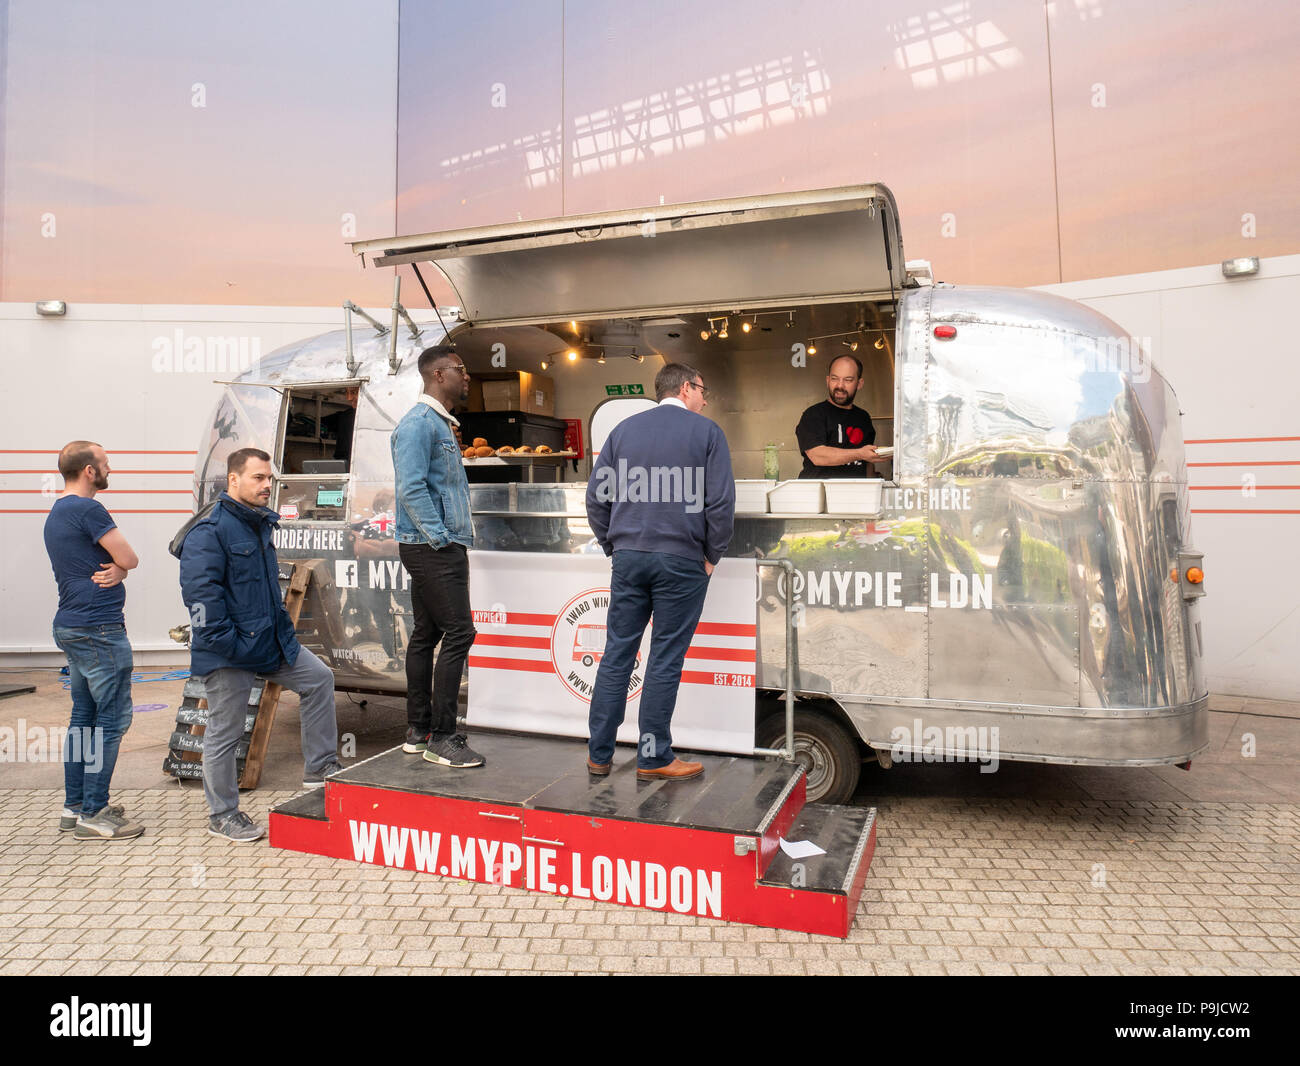 Pop-up van serving take away meals in Broadgate Circle, City of London, UK Stock Photo